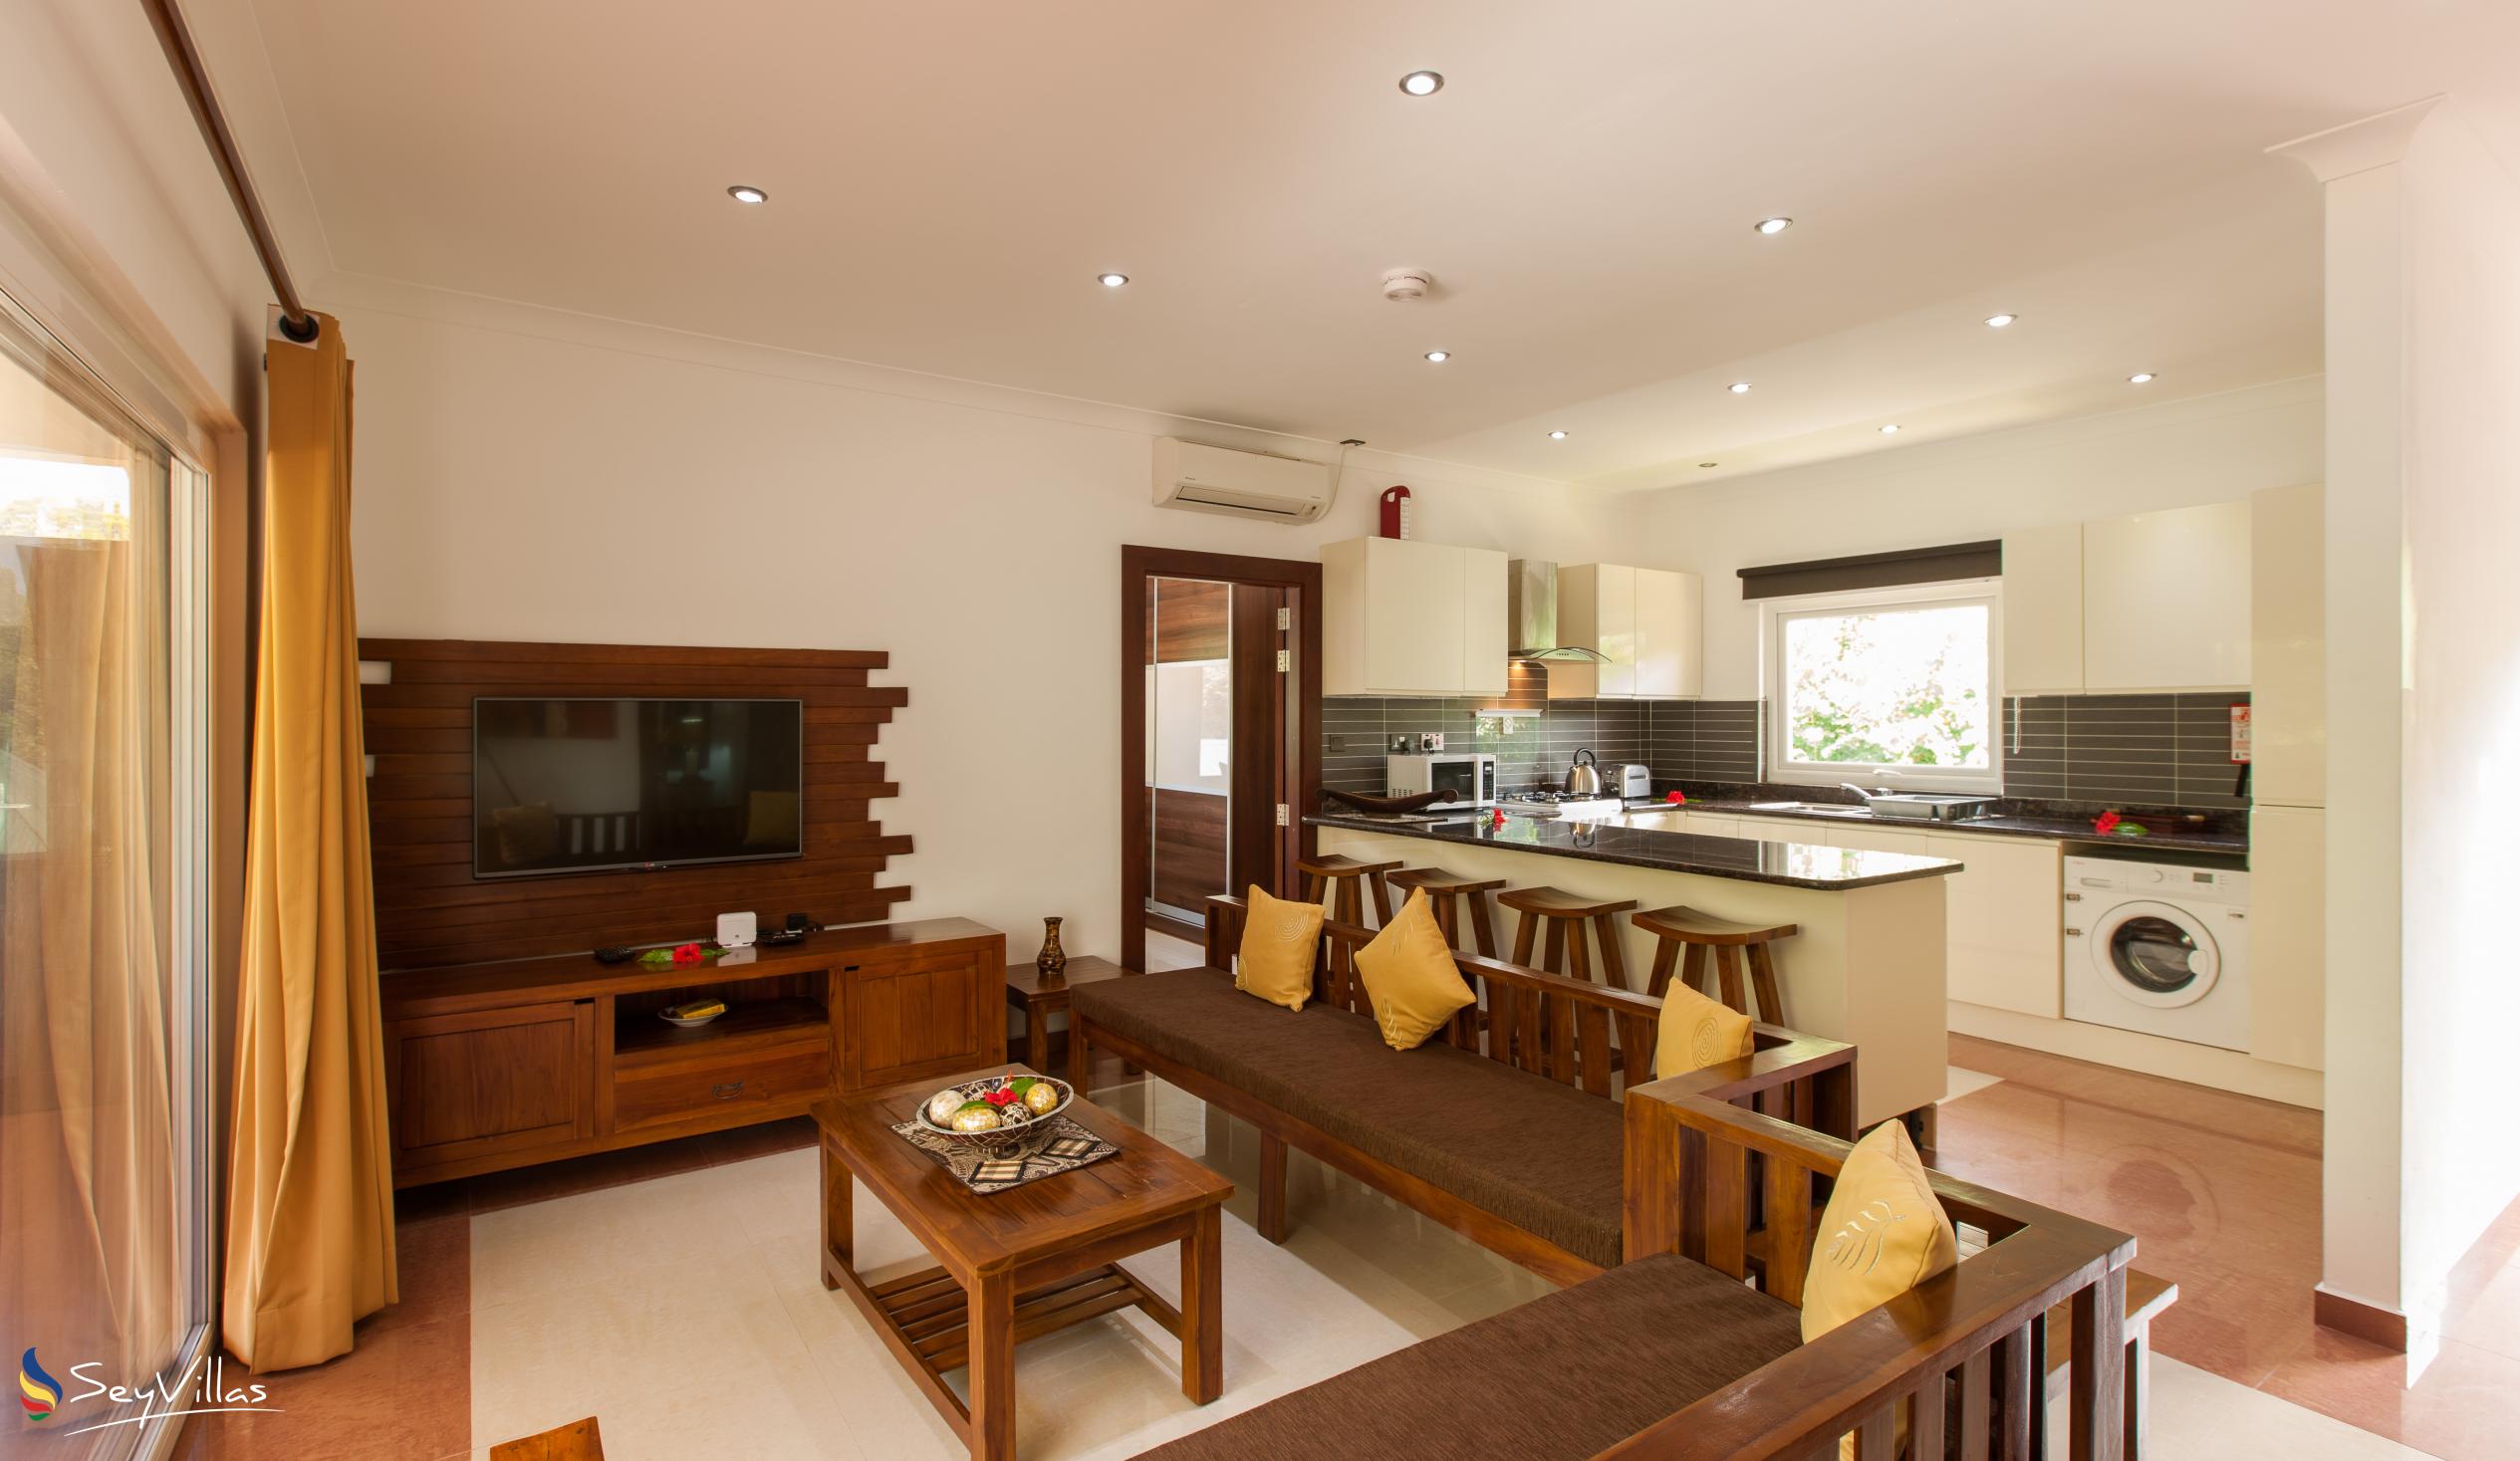 Photo 7: YASAD Luxury Beach Residence - 3-Bedroom Apartment - Praslin (Seychelles)